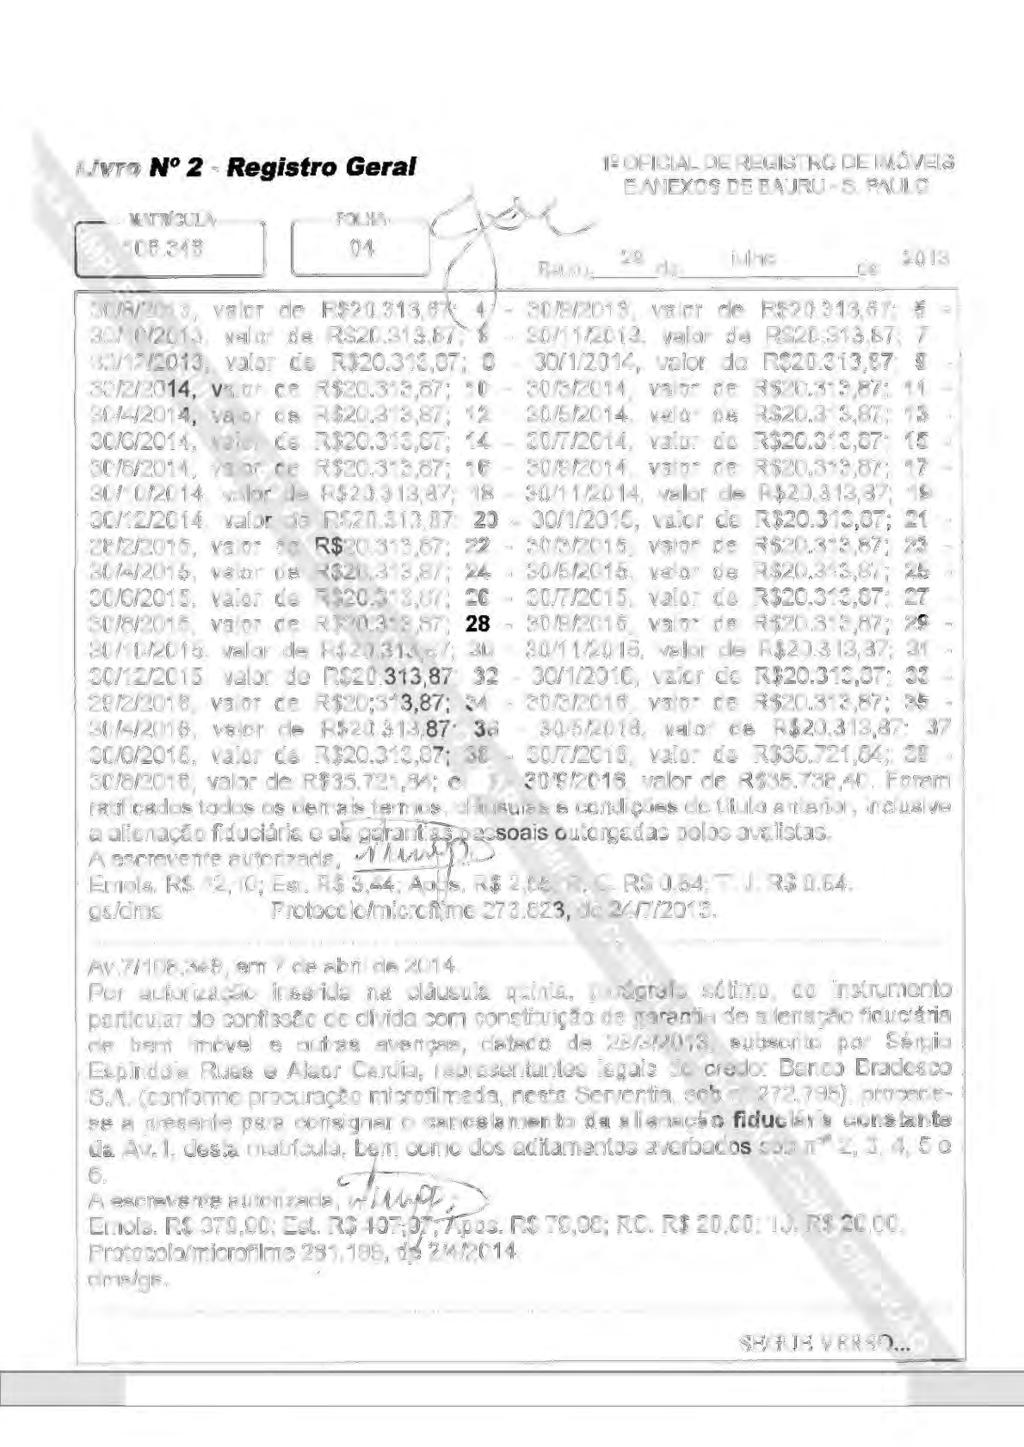 Livro N 2 - Registro Geral CMA~LA"] [FOLHA] 108.348 04 Bauru, 1º OFICIAL DE REGISTRO DE IMÓVEIS E ANEXOS DE BAURU - S. PAULO 29 de julho de 2013 30/8/2013, valor de R$20.